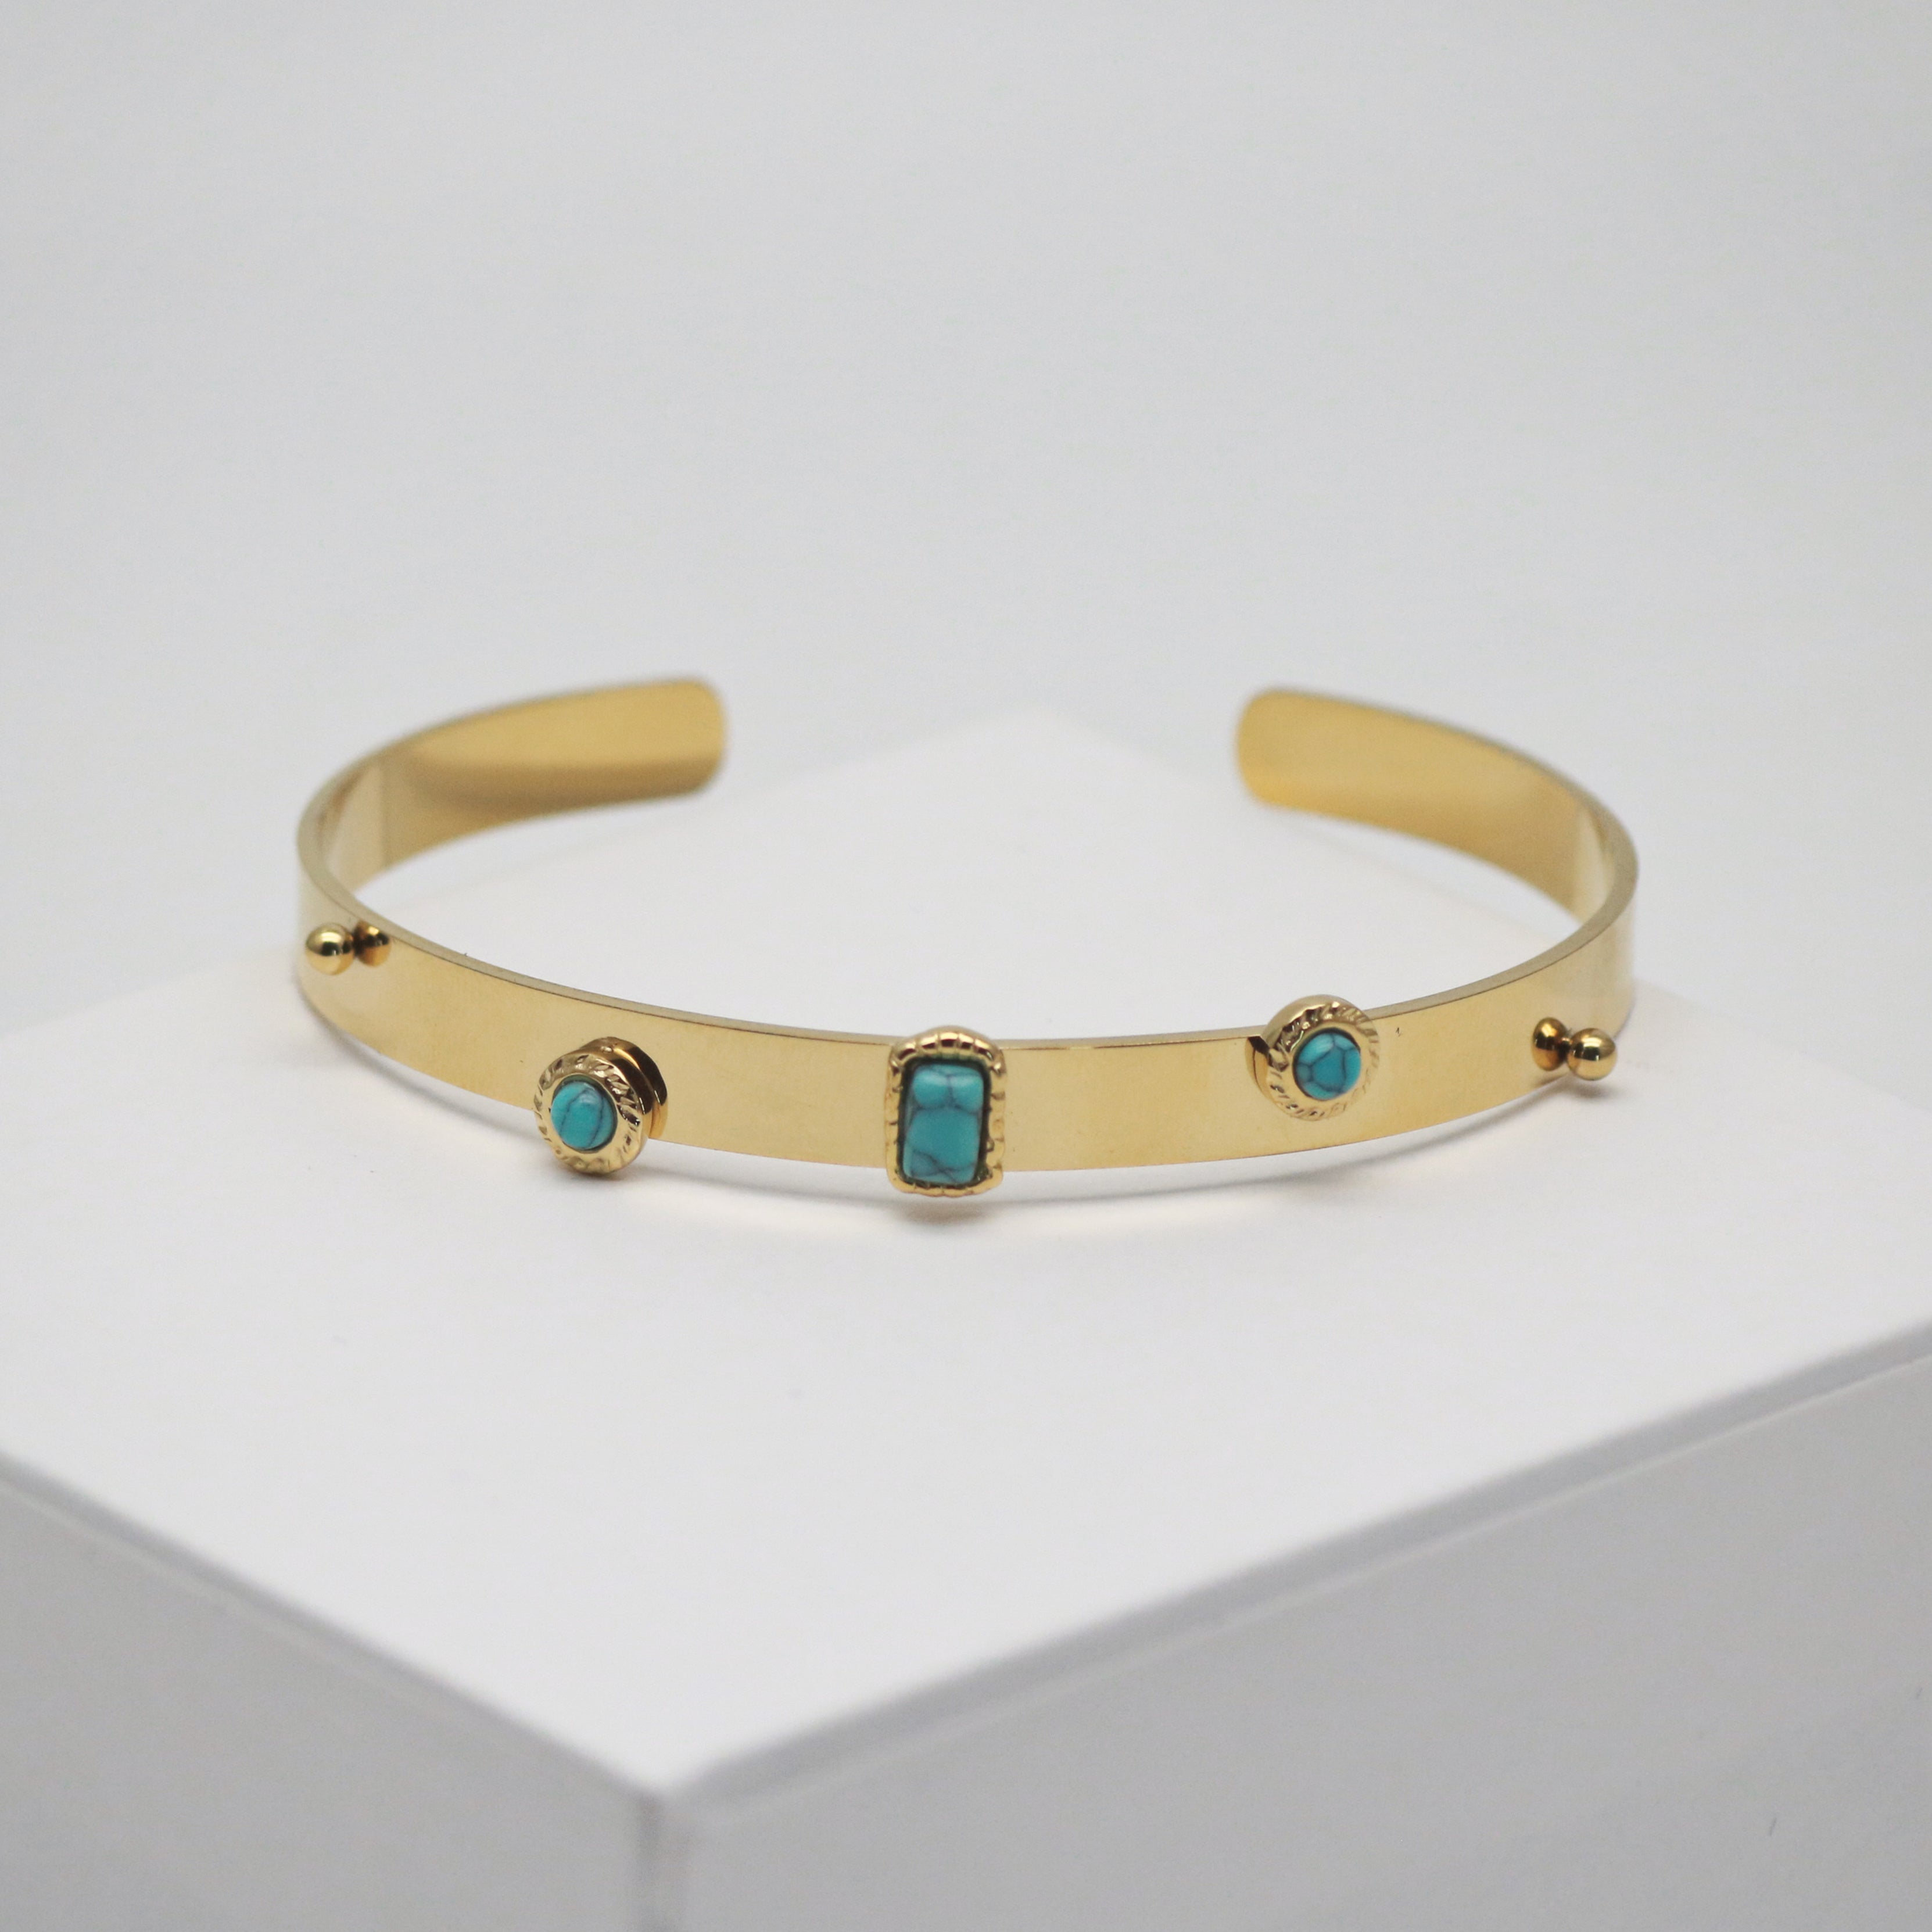 turquoise cuff bracelet